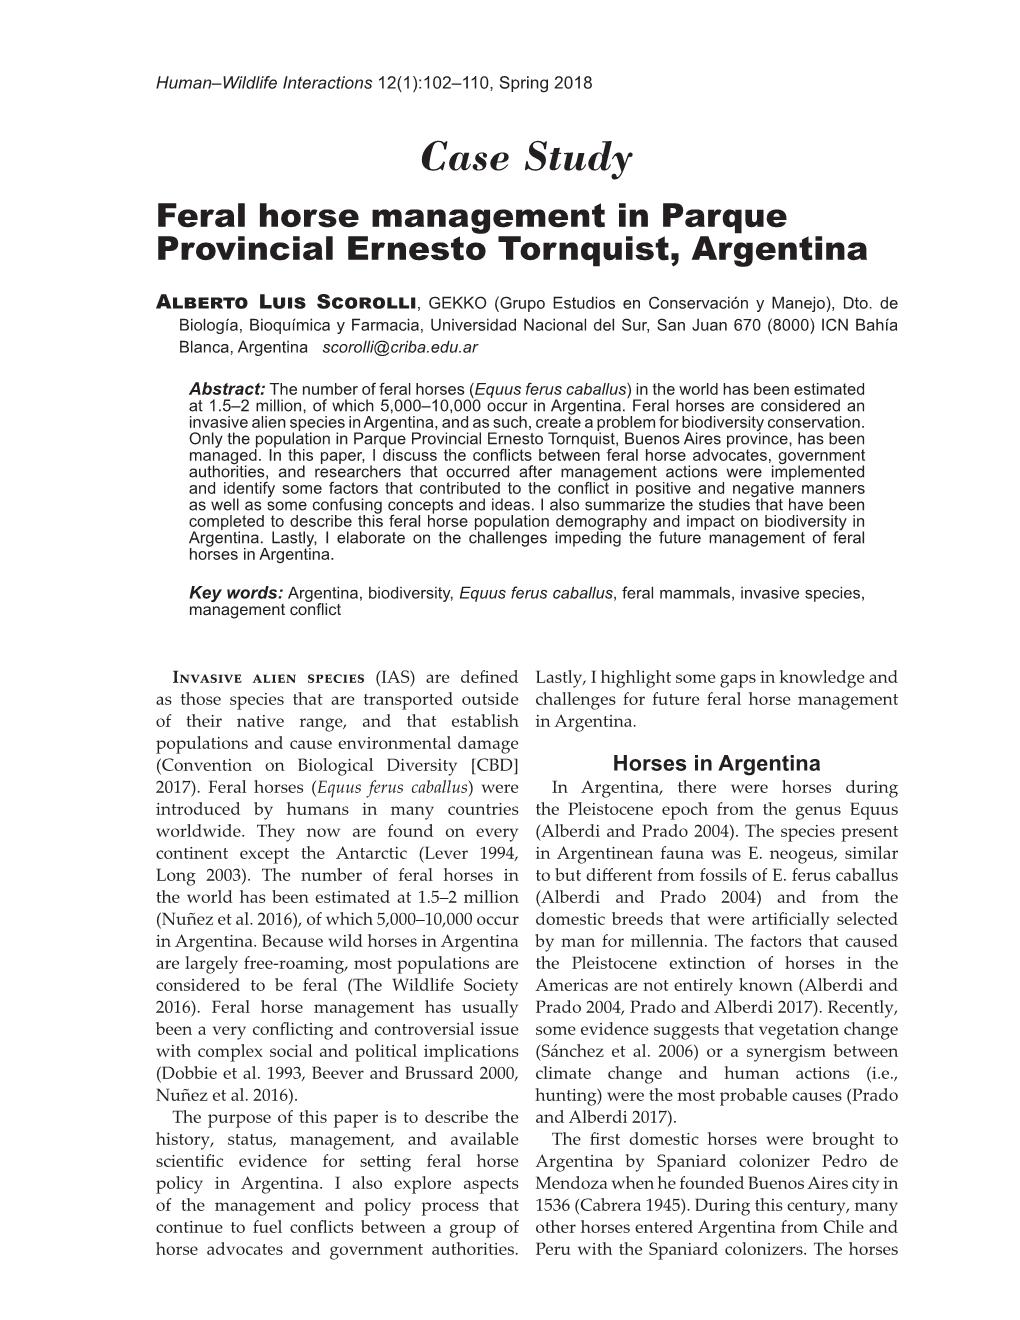 Feral Horse Management in Parque Provincial Ernesto Tornquist, Argentina